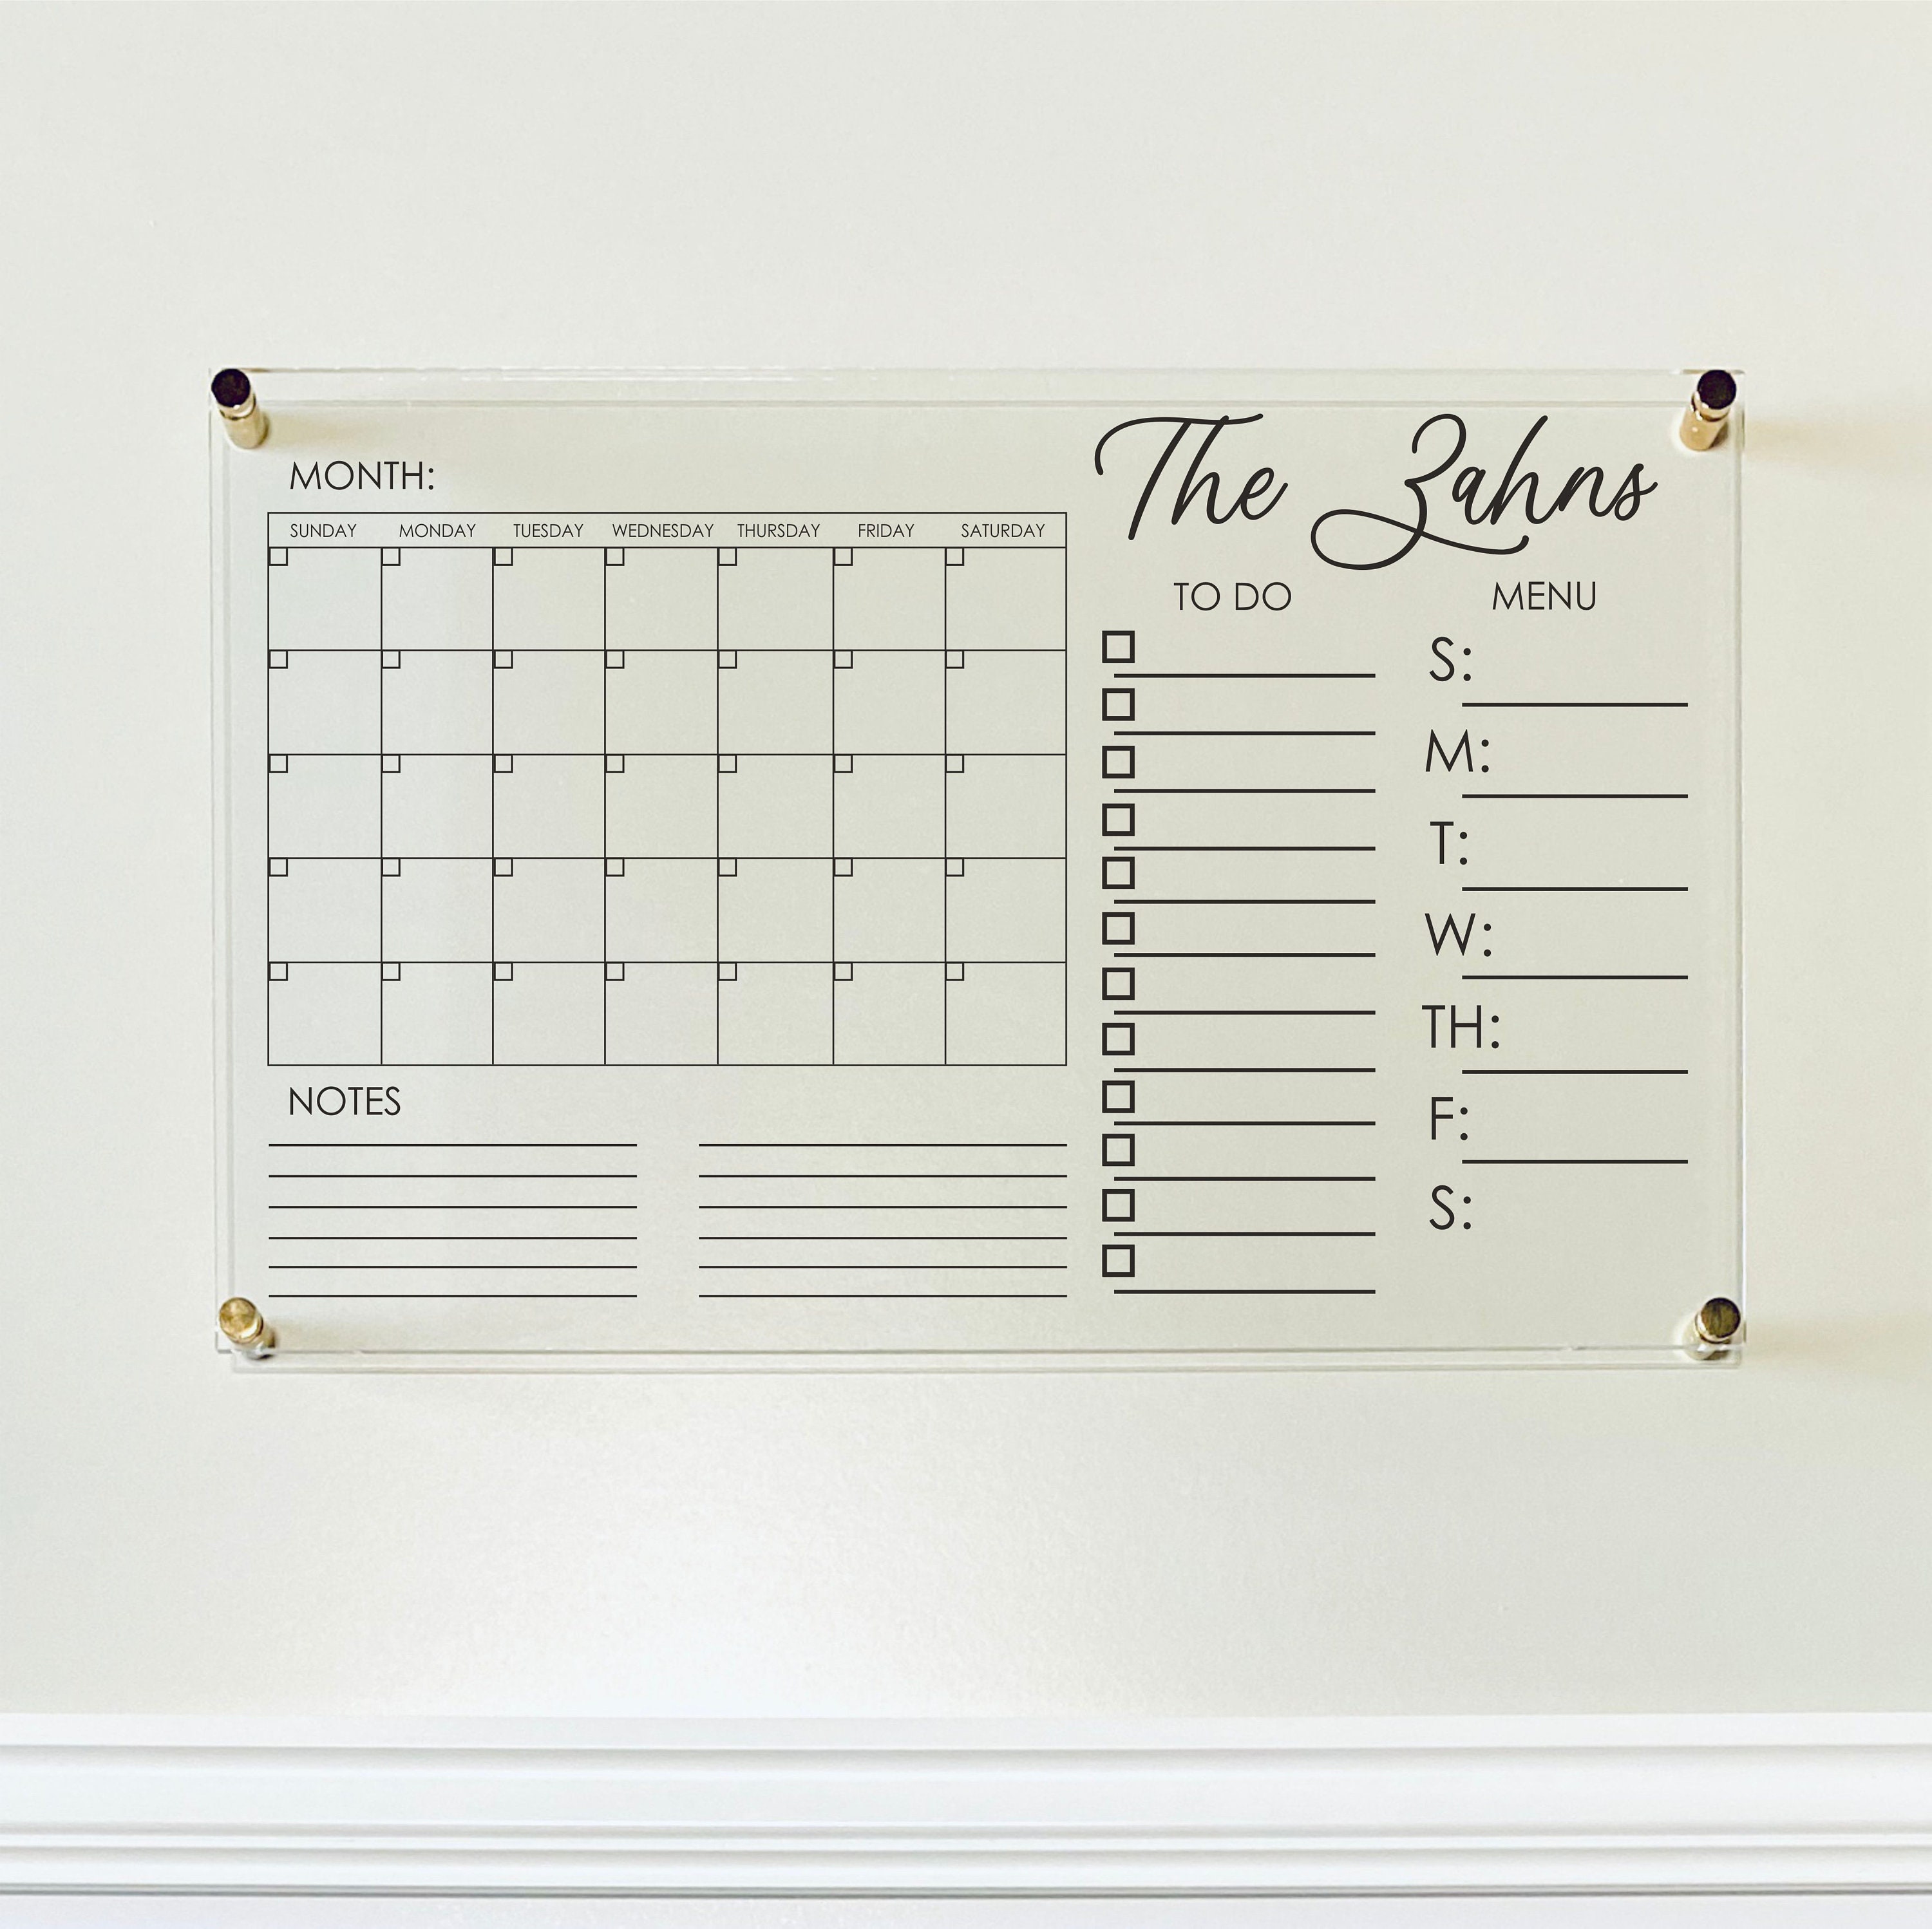 Personalized Acrylic Calendar for Wall Ll Dry Erase Board Lucite Clear Acrylic  Calendar Office Decor Housewarming 03-007-001 